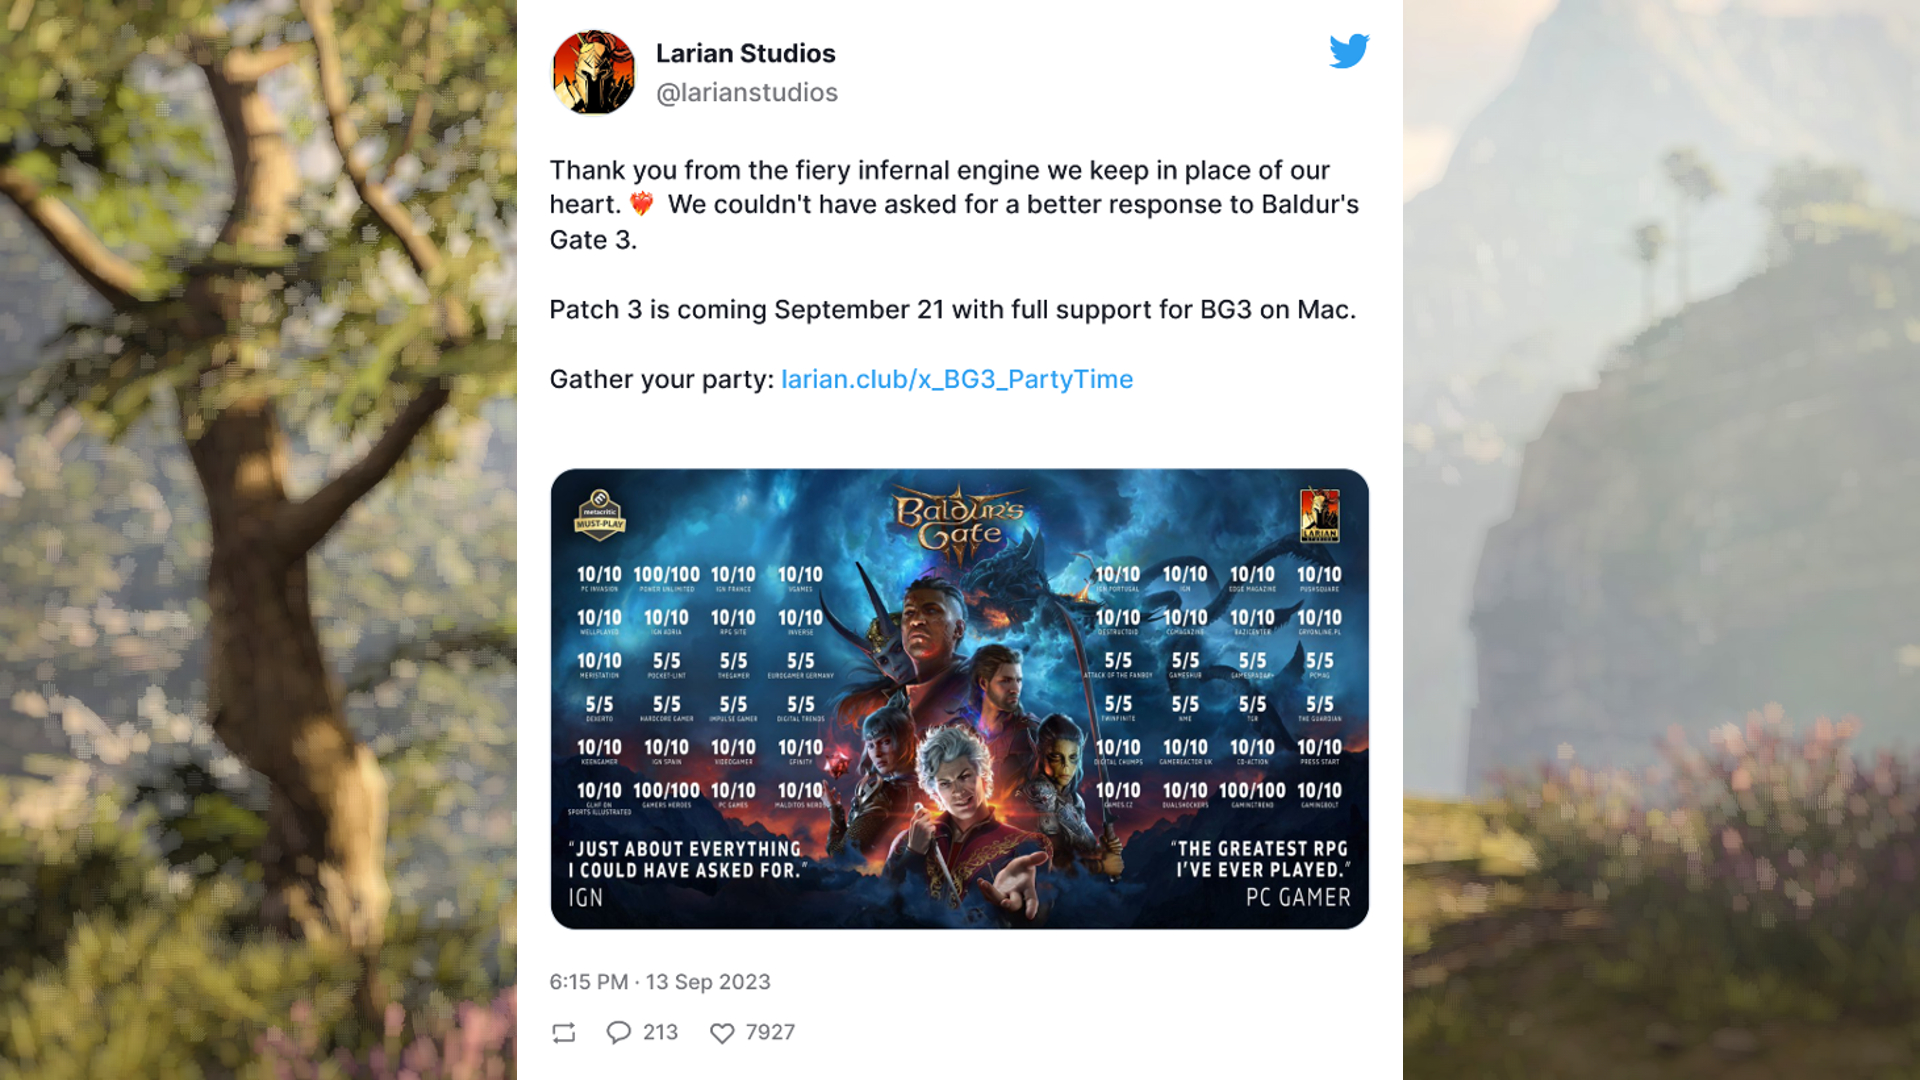 Baldur's Gate 3 update post from Larian Studios on Twitter